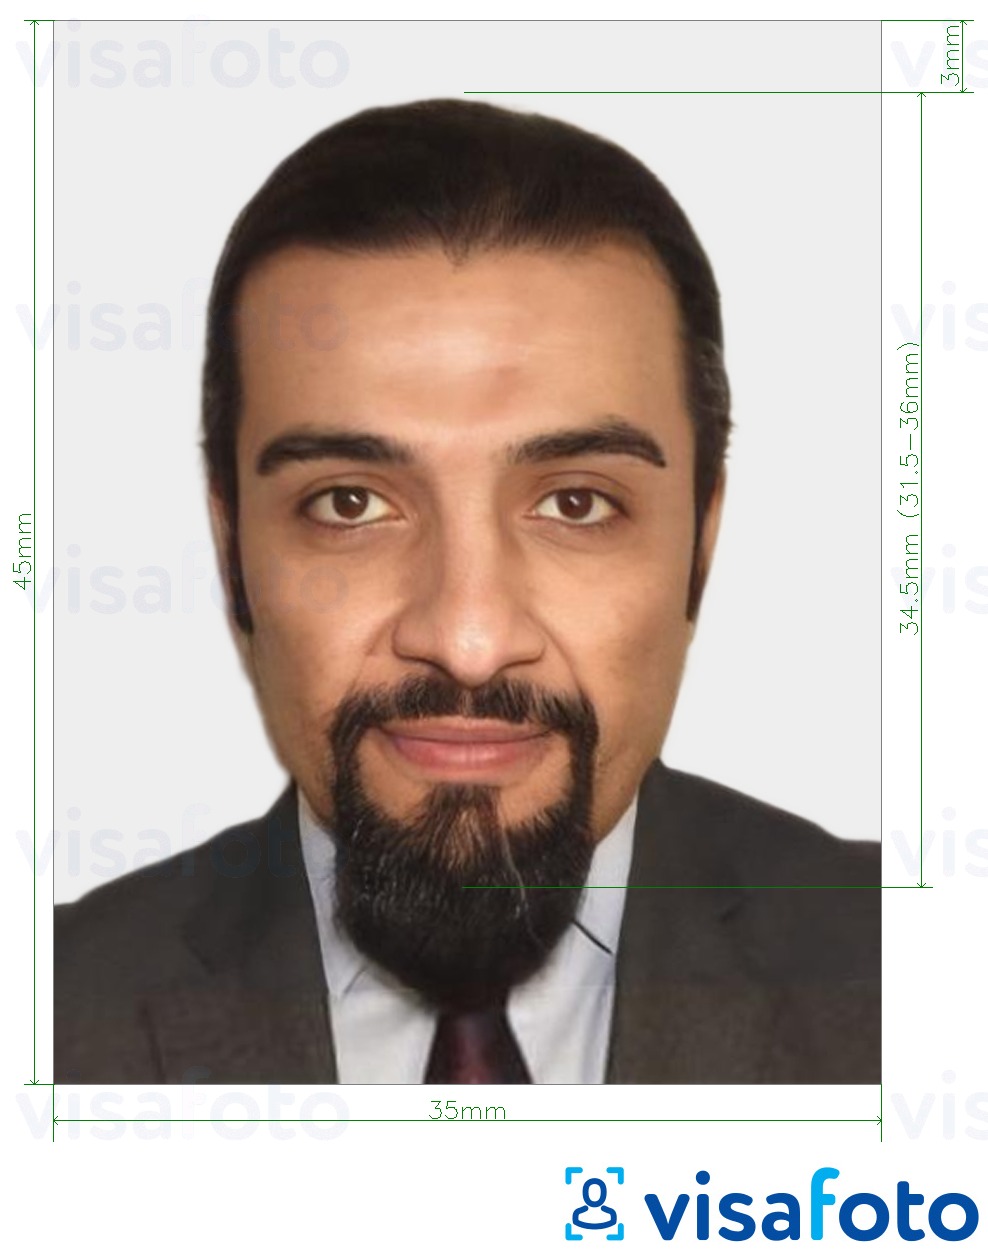 Contoh foto untuk Pasport Mauritania 35x45 mm (3.5x4.5 cm) dengan spesifikasi saiz yang tepat.